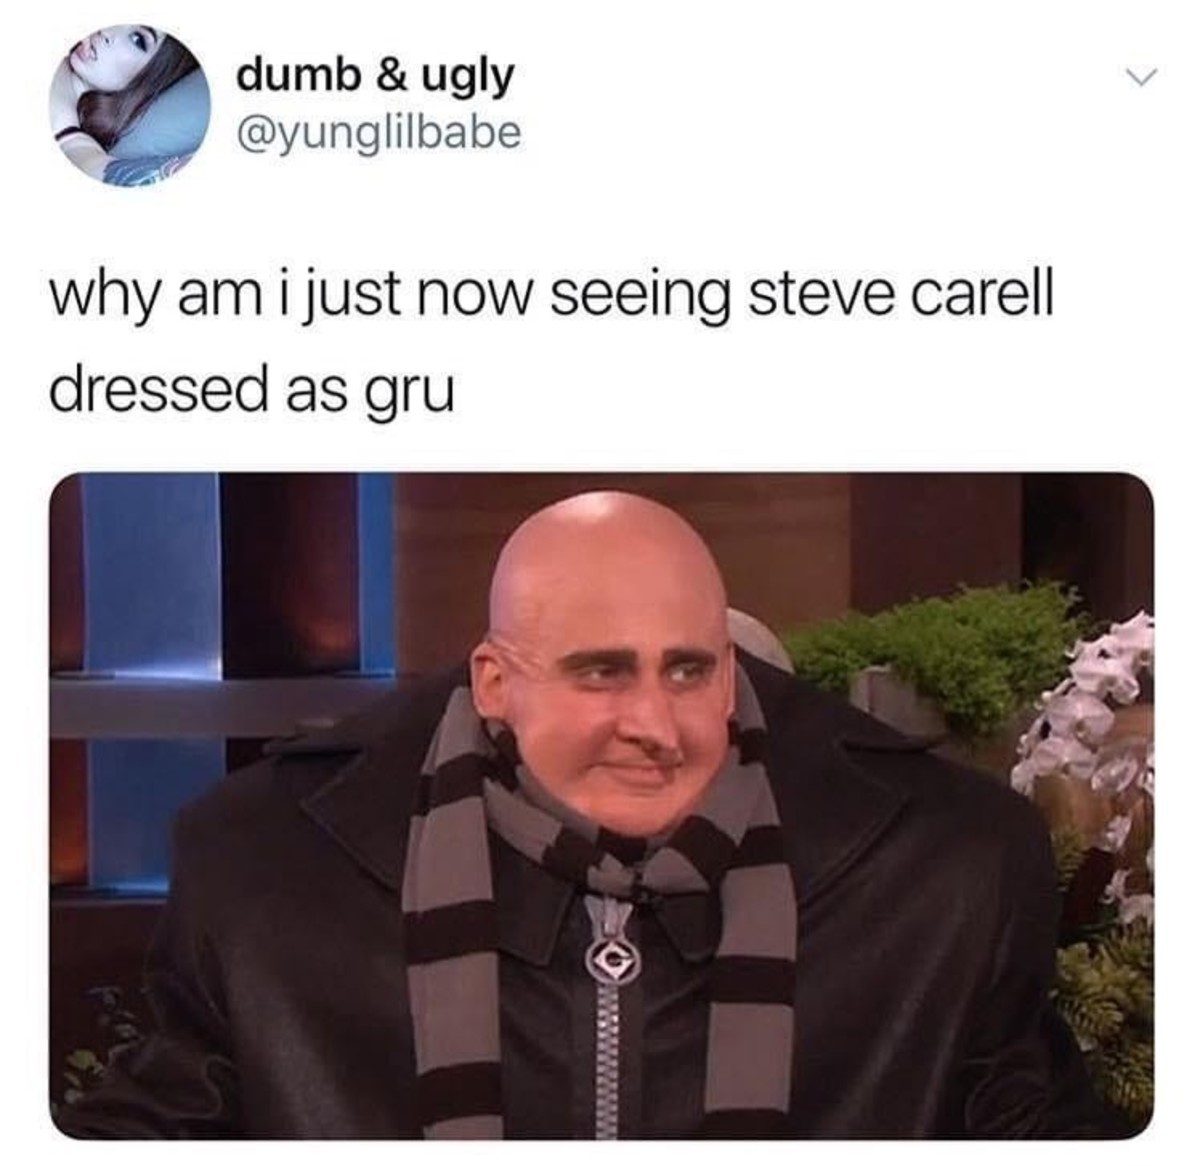 steve carell gru meme - dumb & ugly why am i just now seeing steve carell dressed as gru Www